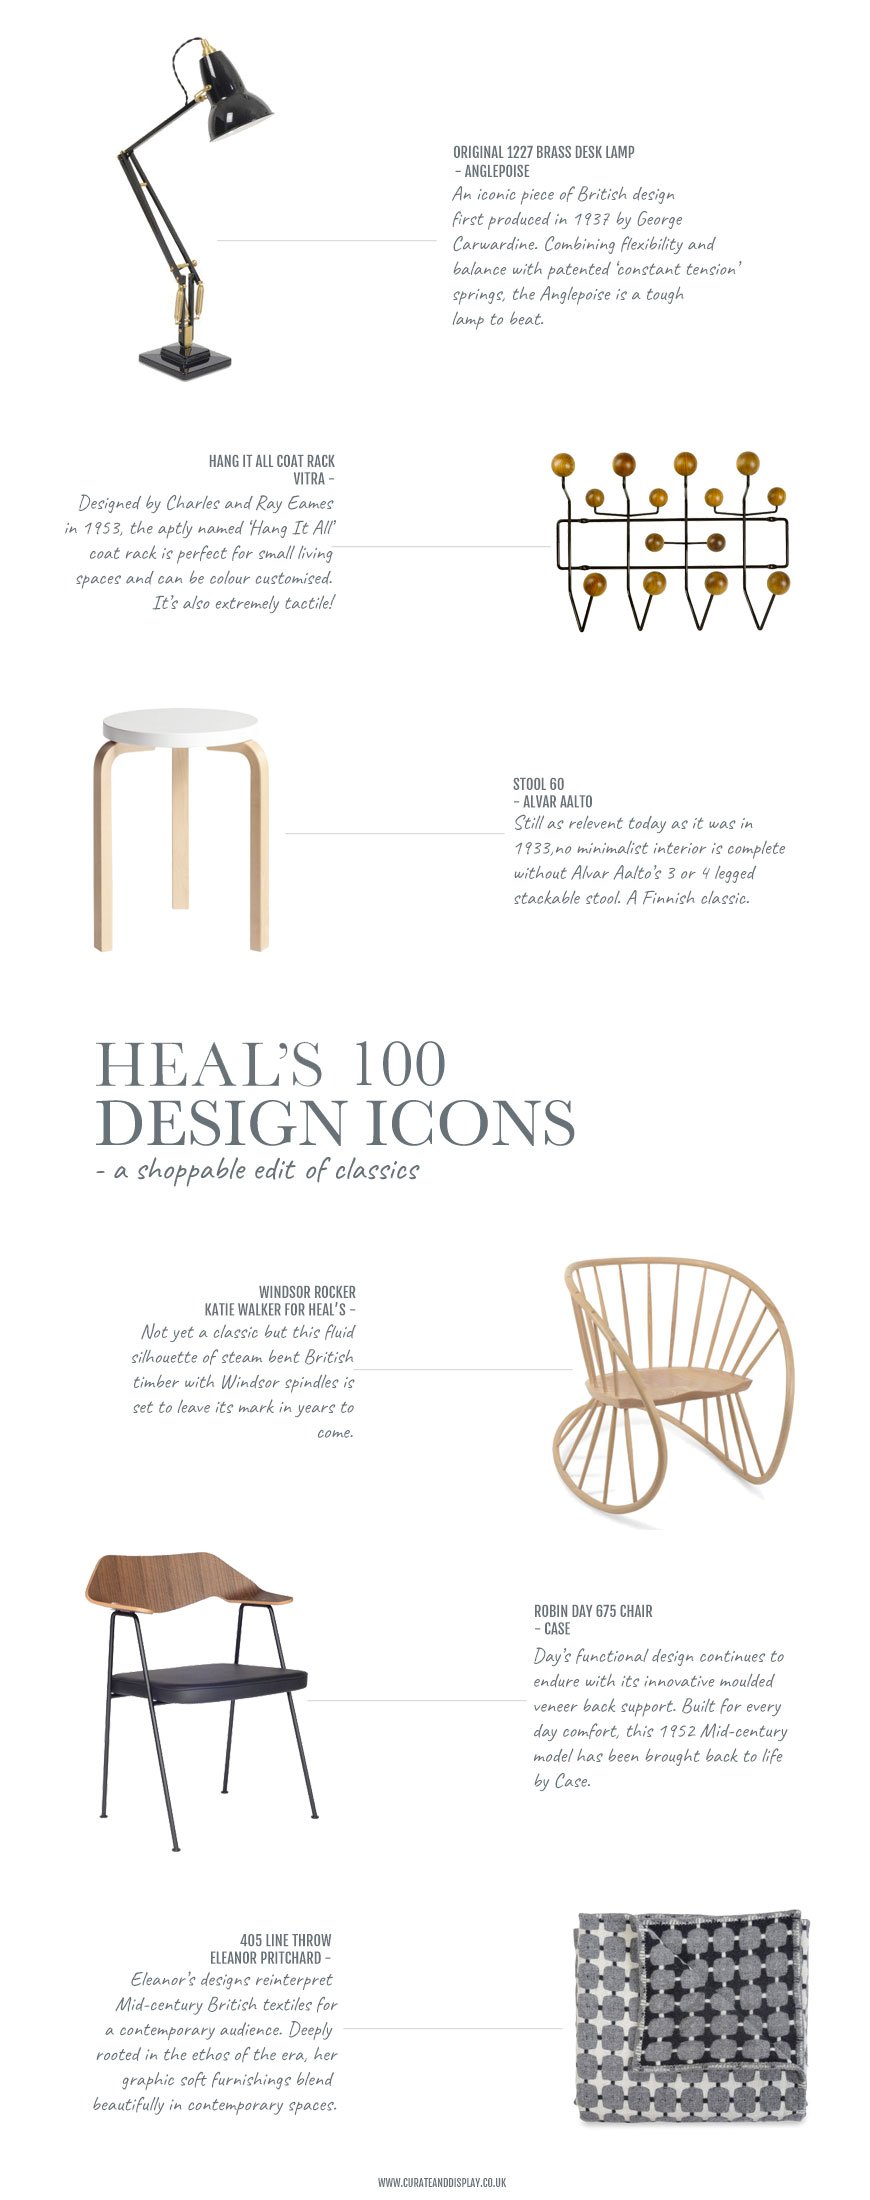 Heal's 100 design icons as chosen by Magnus Englund